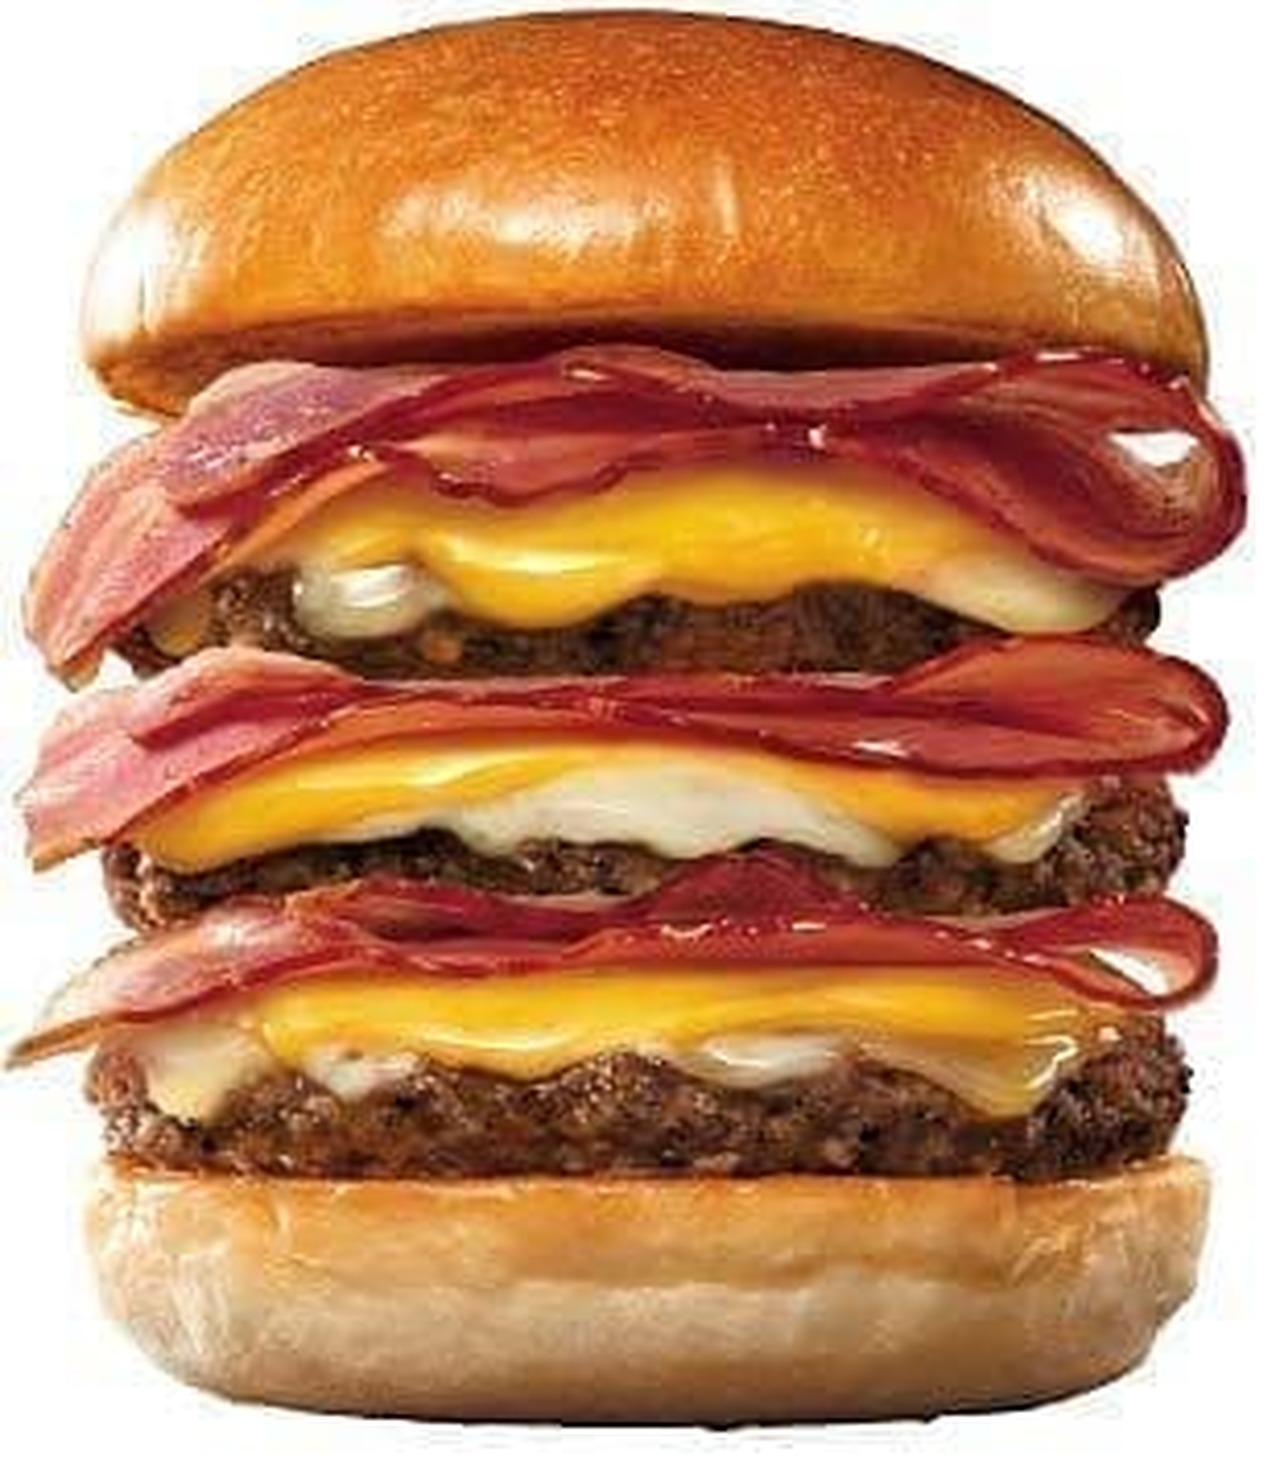 Lotteria "Triple Bacon Triple Exquisite Cheeseburger"